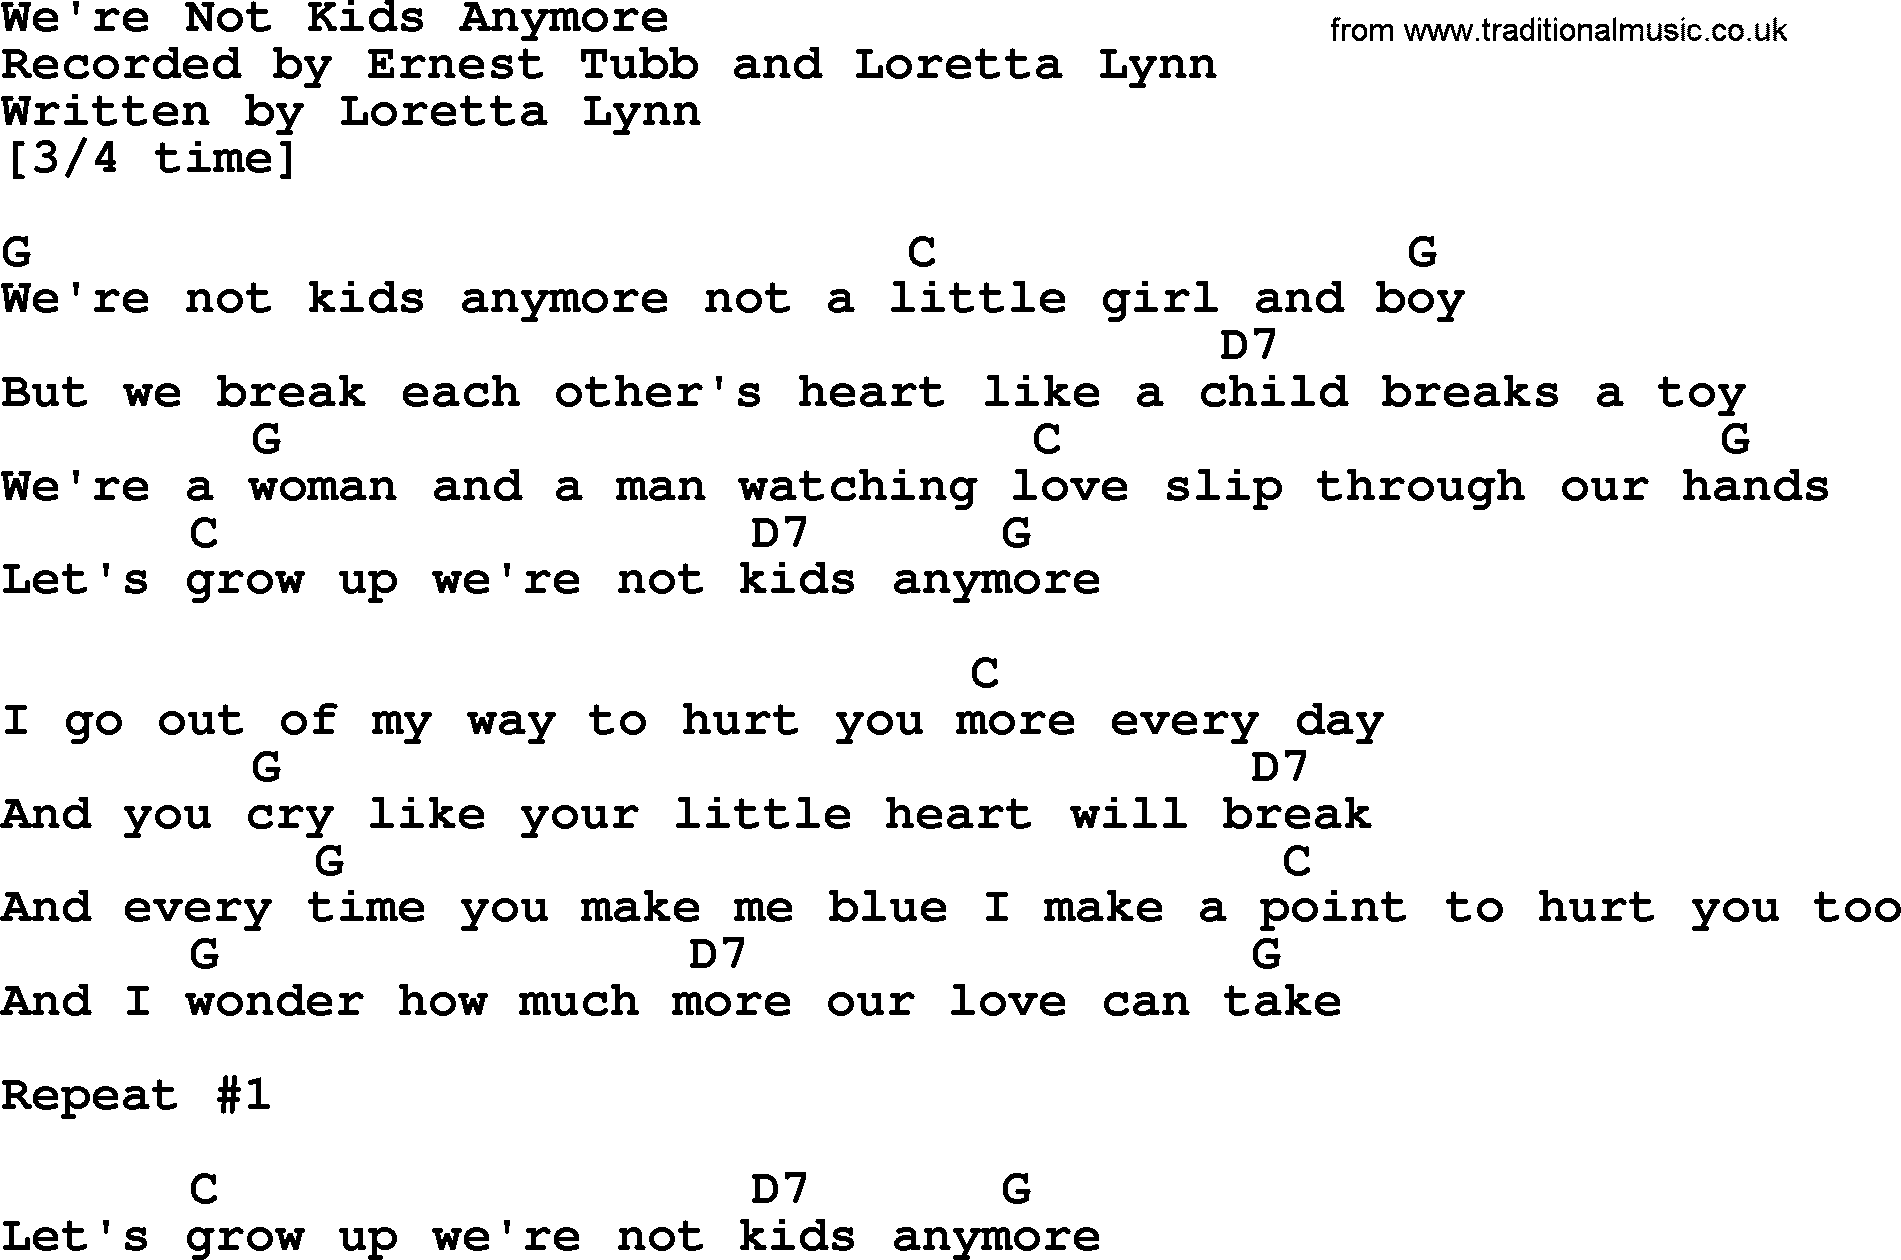 Loretta Lynn song: We're Not Kids Anymore lyrics and chords